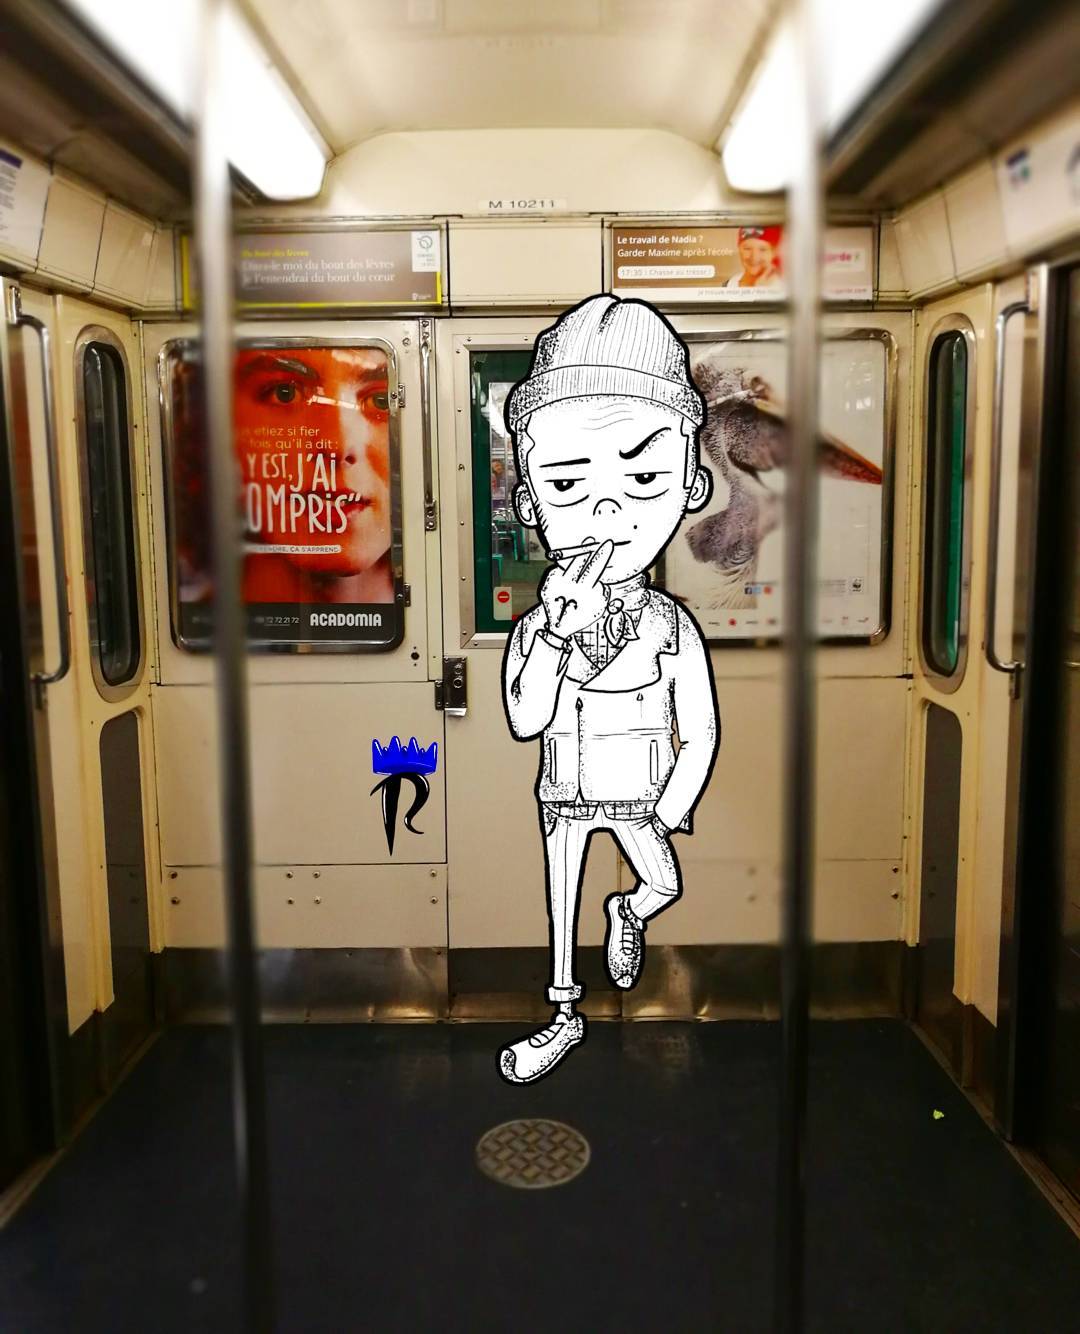 richard sirap instagram métro jamie hewlett